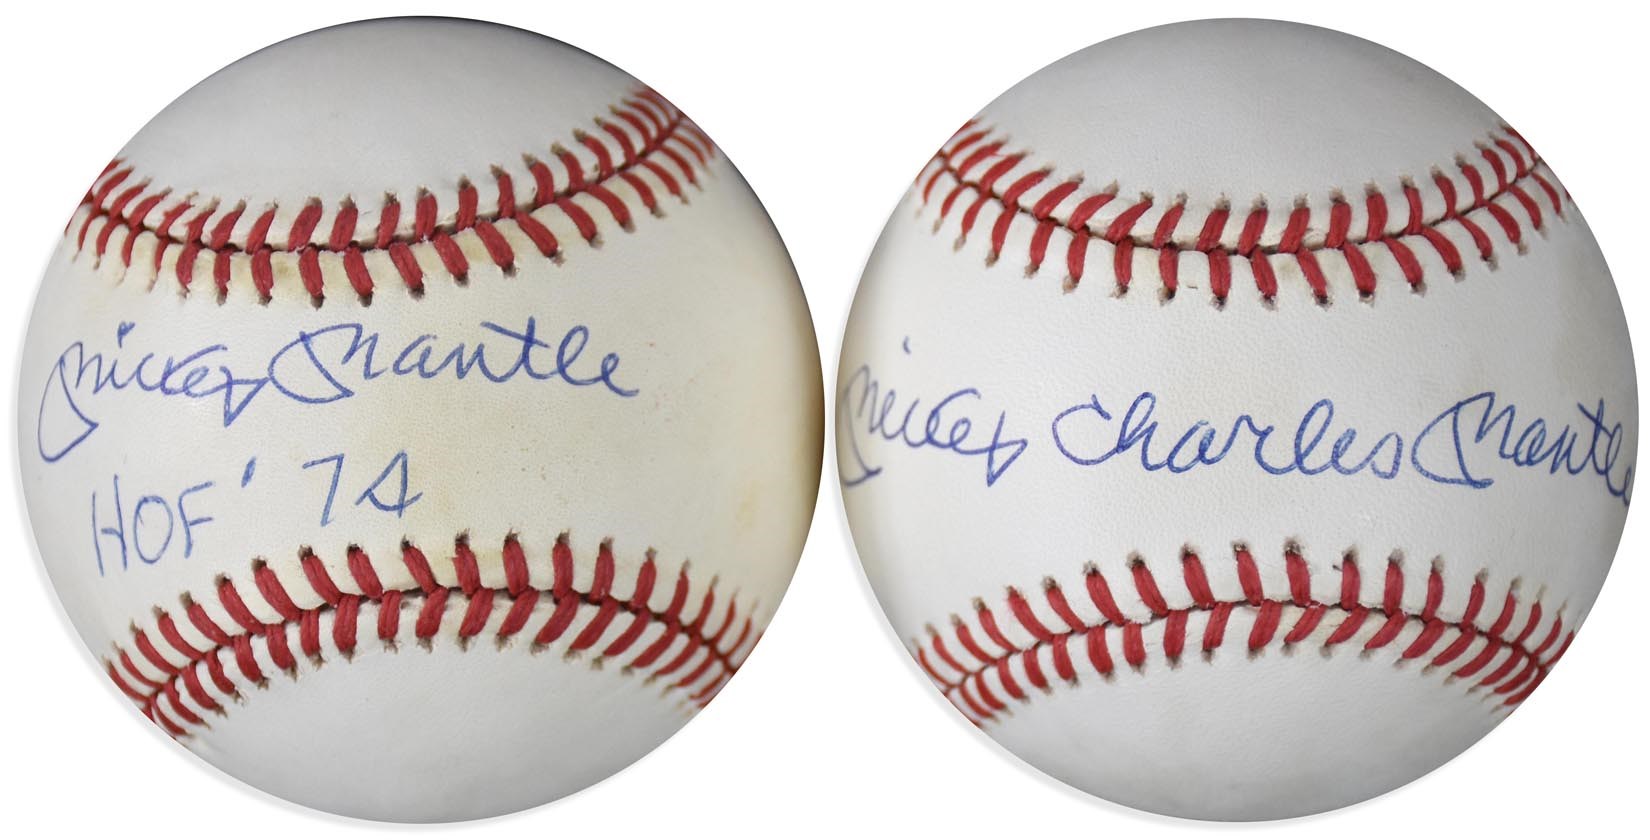 Mickey "Charles" Mantle and "HOF 1974" Signed Baseballs (2)